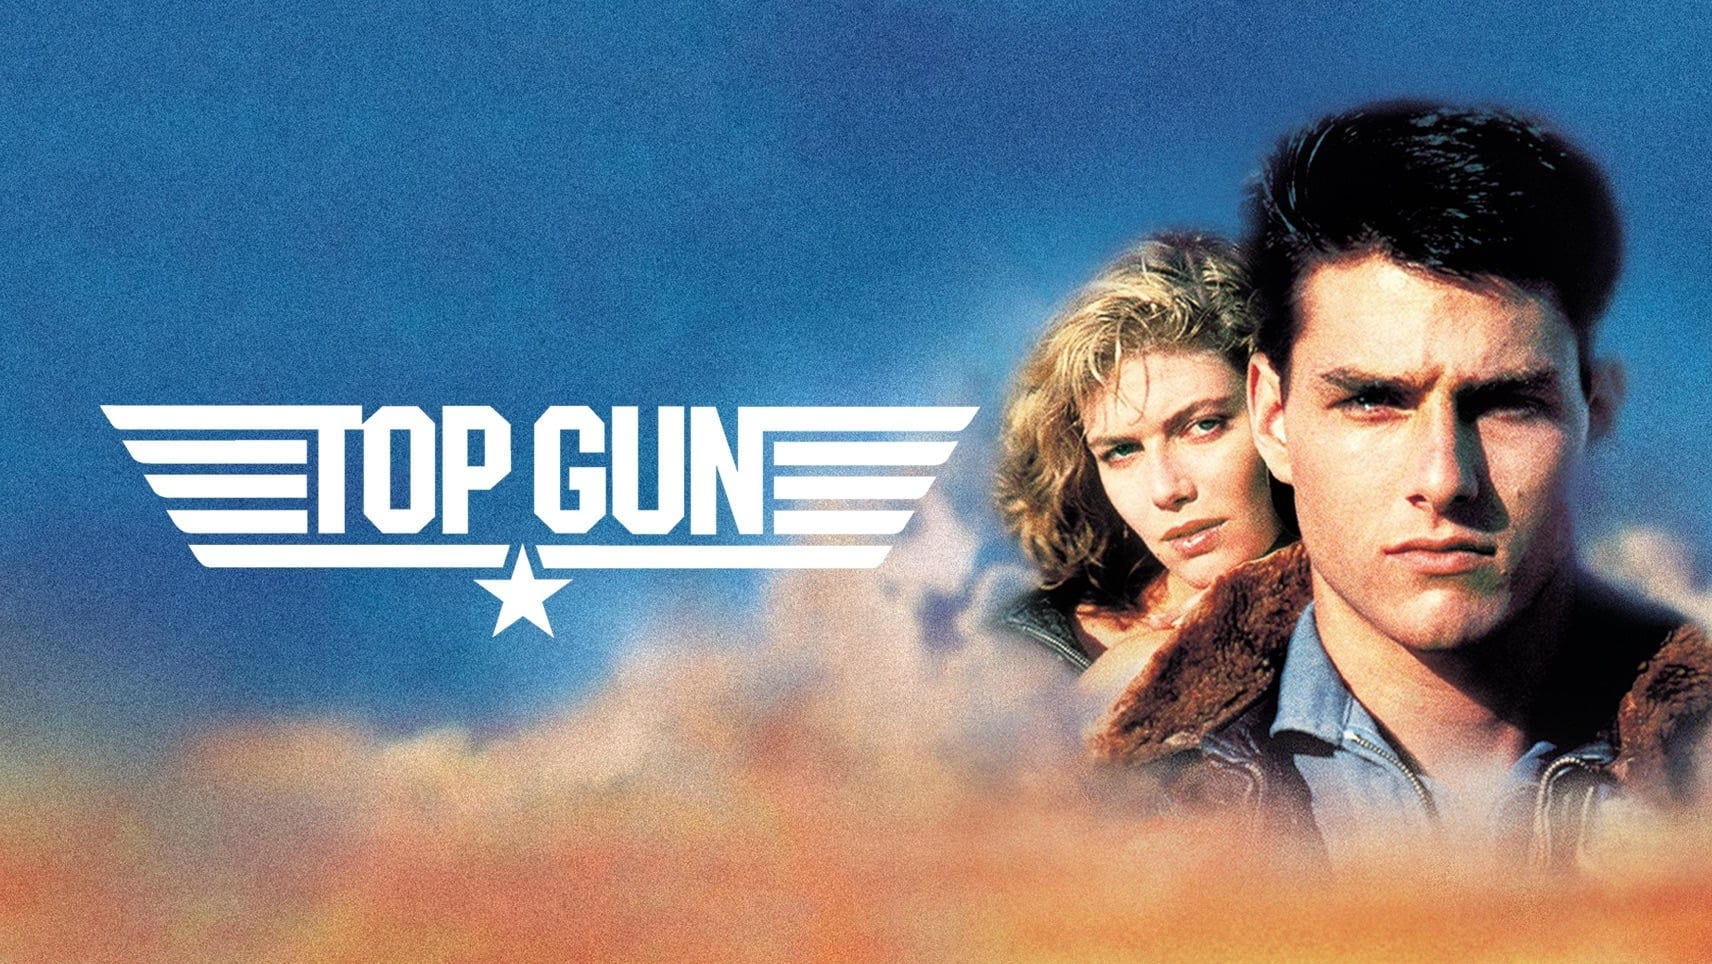 Watch Top Gun 1986 English Movies Hd Online By Qliridon Ademi G English Movies Top Gun 1986 Feb 21 Medium